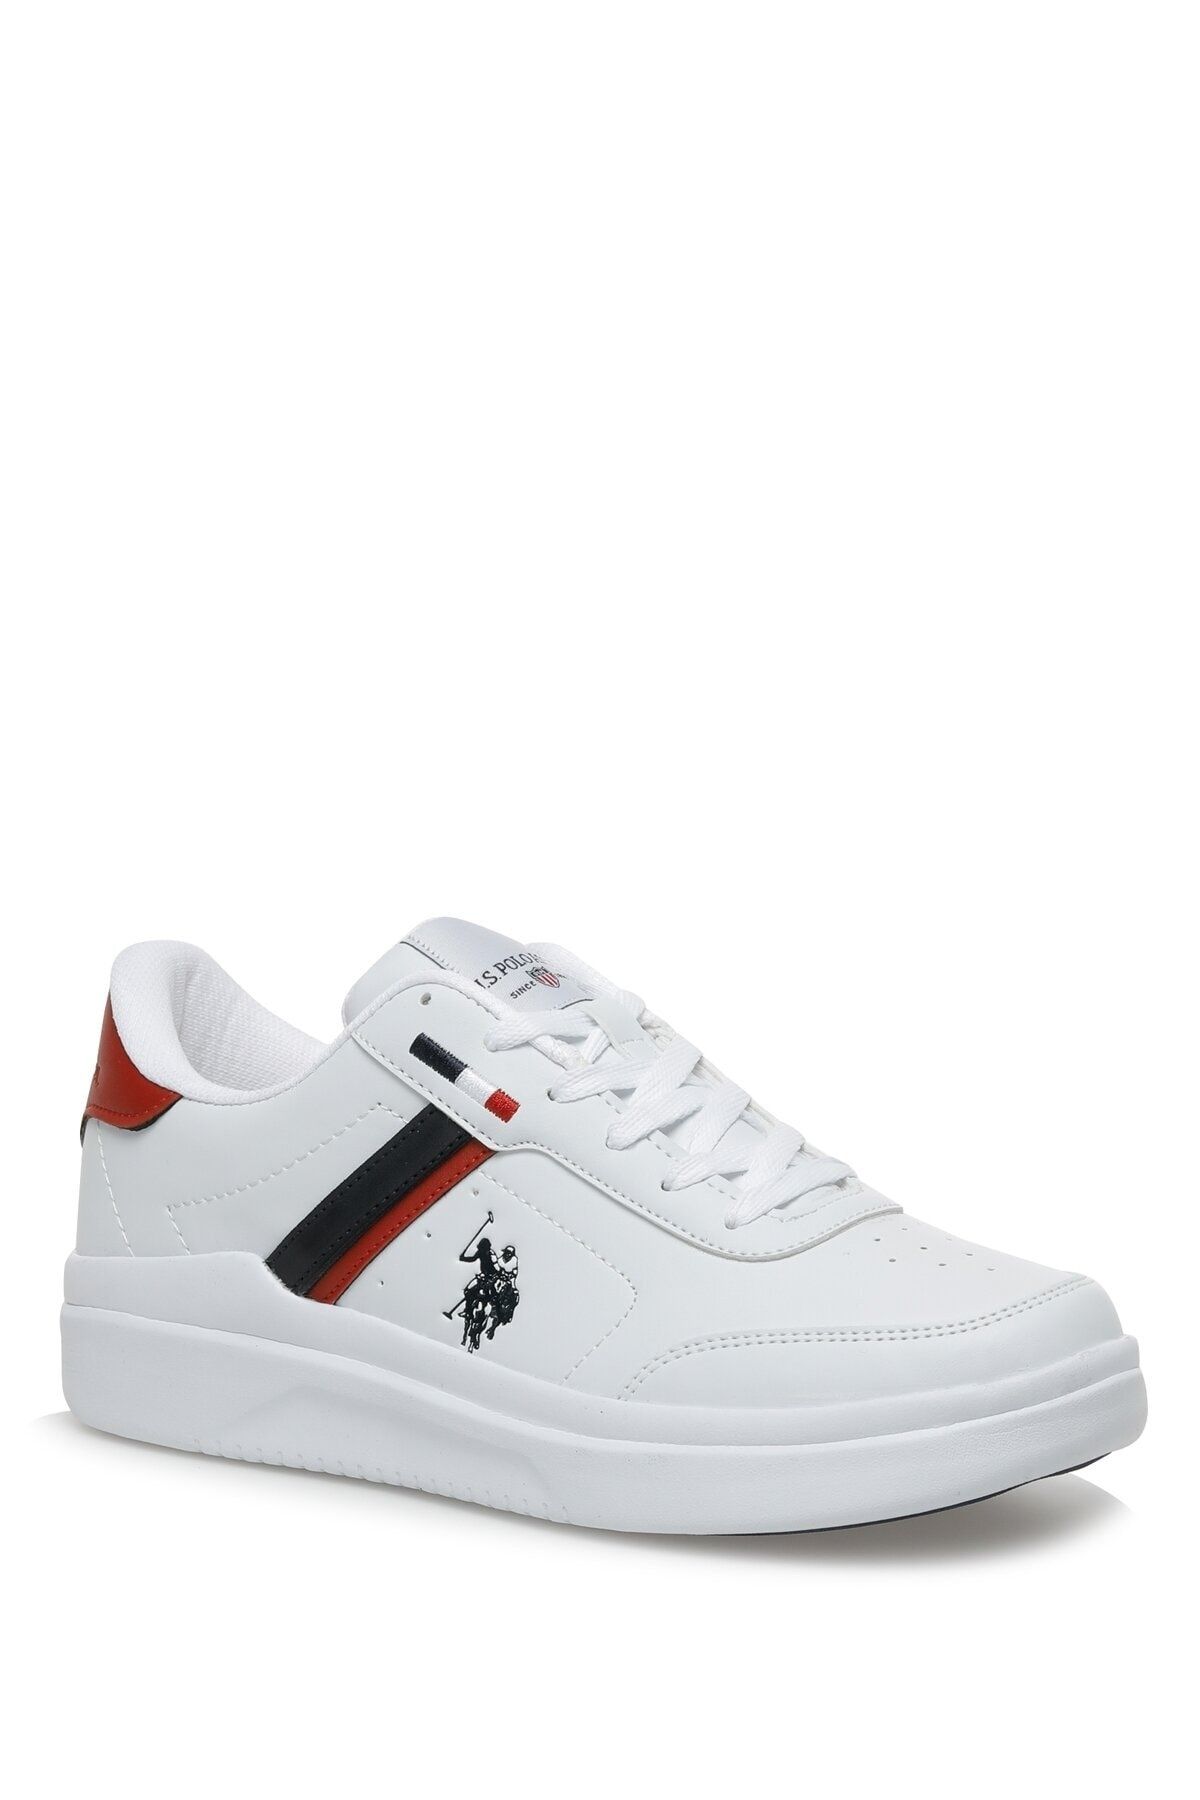 U.S. Polo Assn. Berkeley 3fx Beyaz Erkek Sneaker